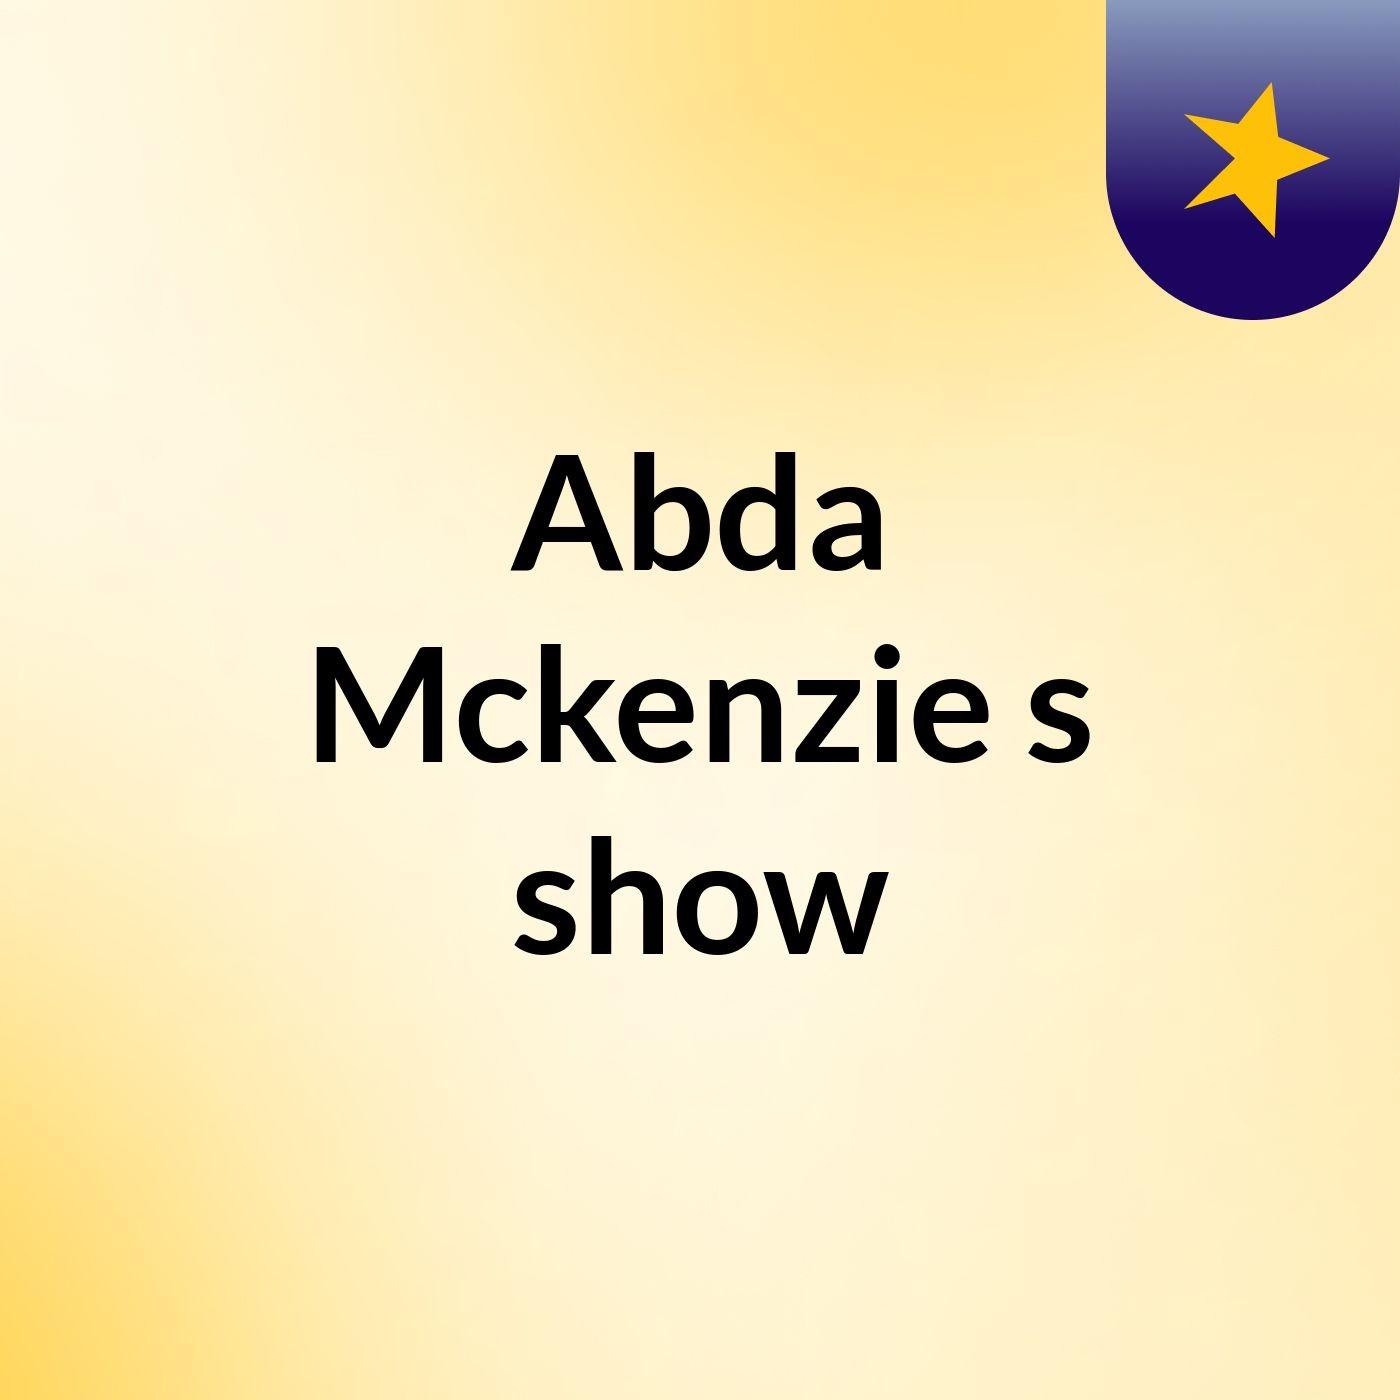 Episodio 7 - Abda Mckenzie's show